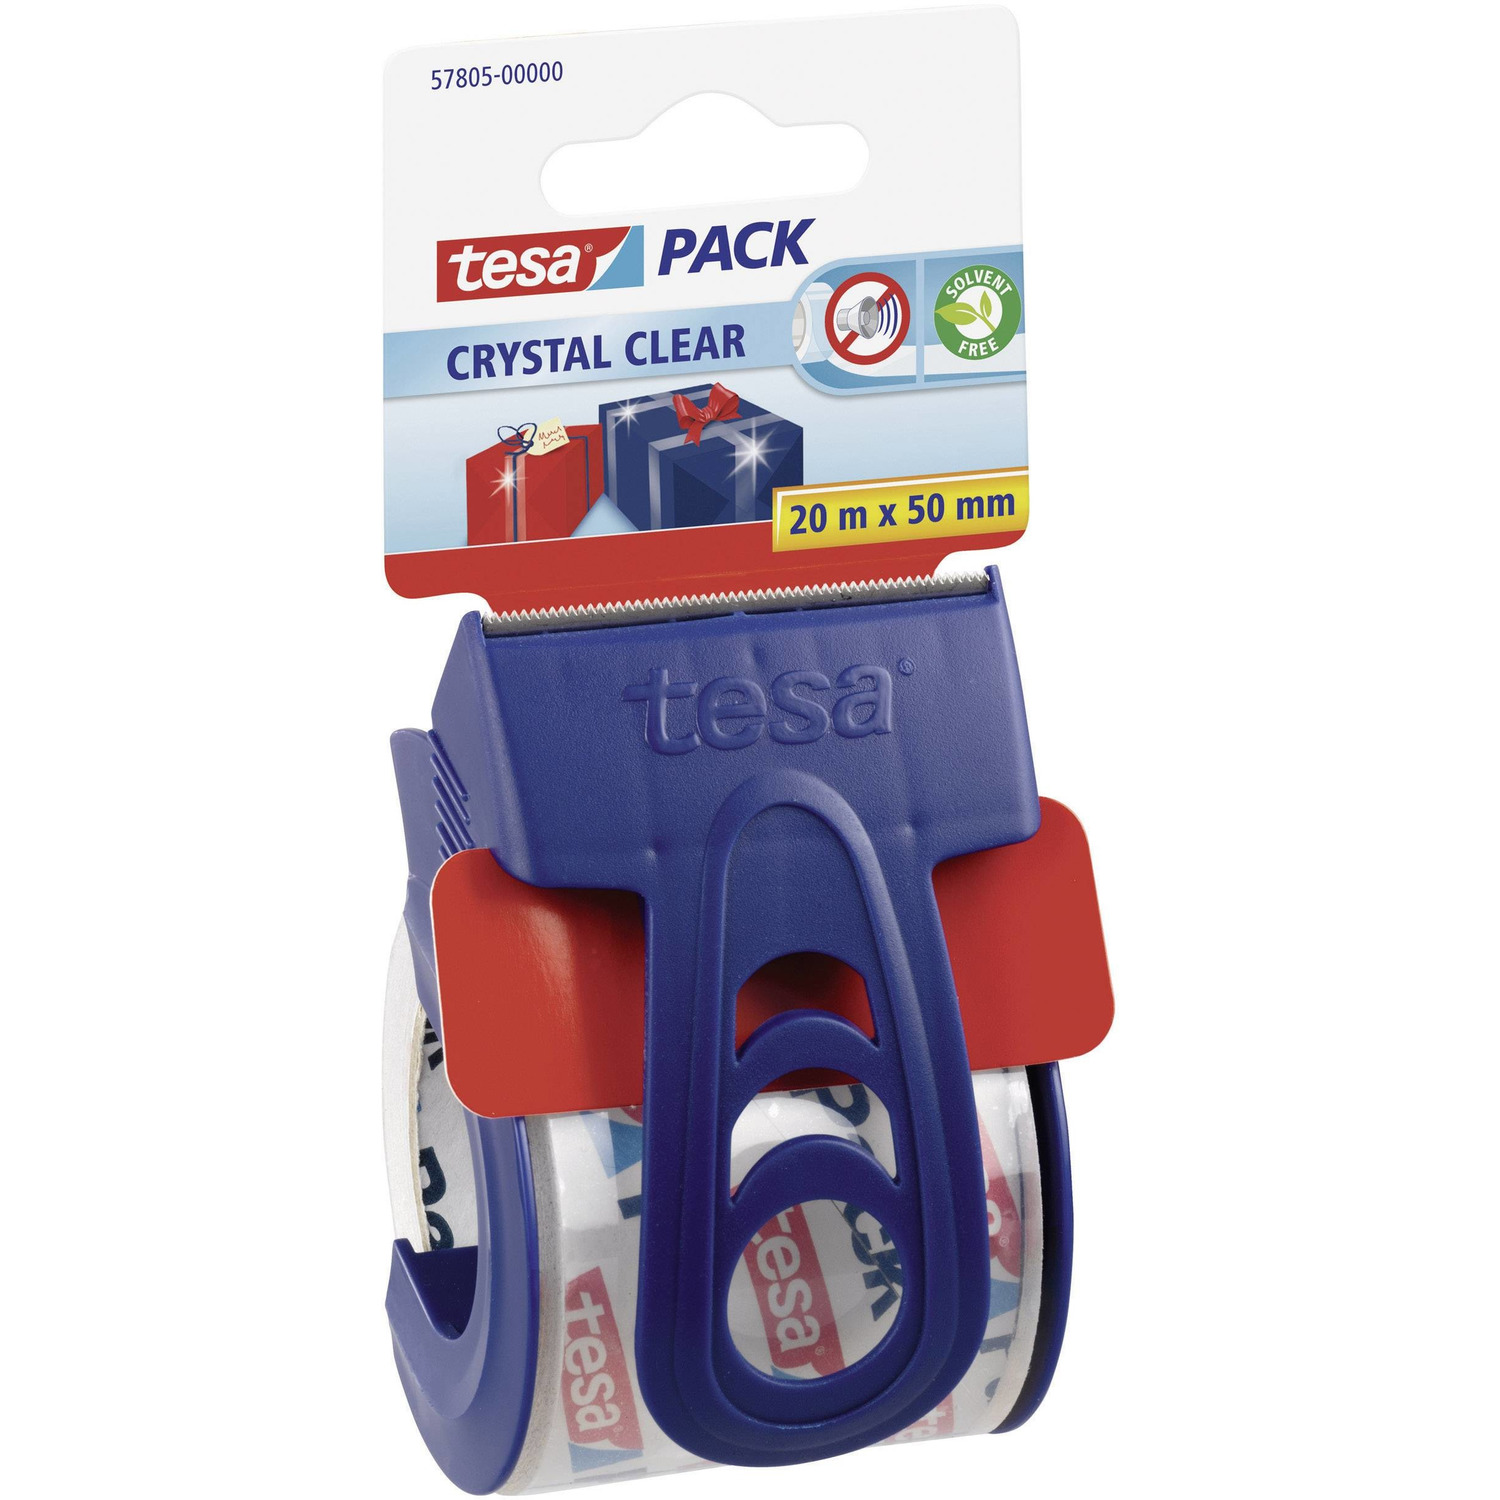 1x Tesa mini verpakkingstaperoller roldispenser incl. 20 mtr tape verpakkingsbenodigdheden